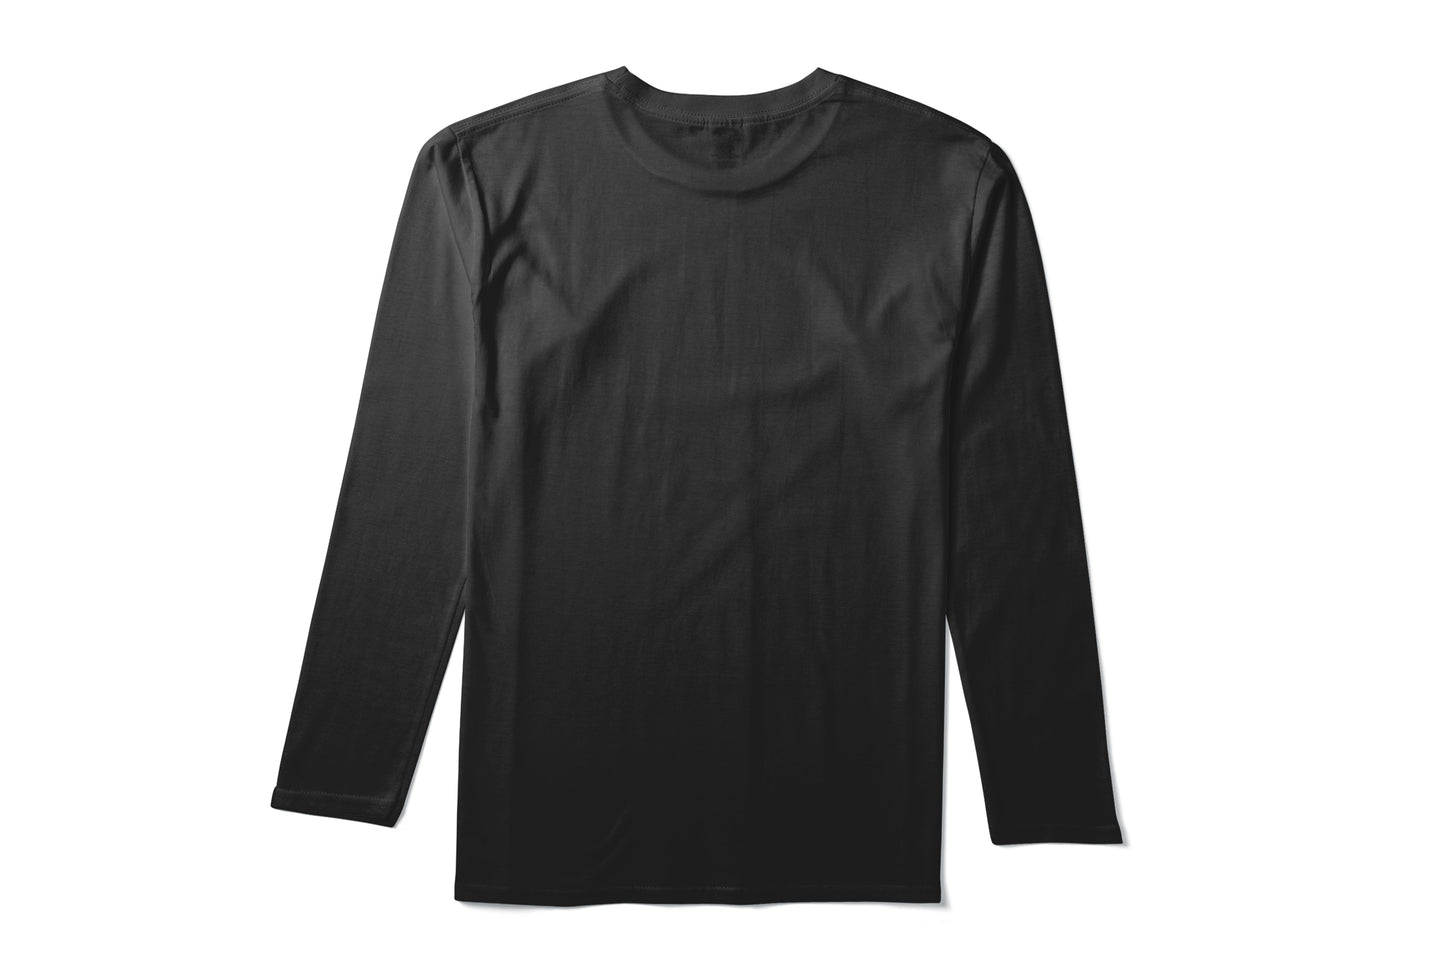 Arteries Heat Transfer on Black Long Sleeve Shirt